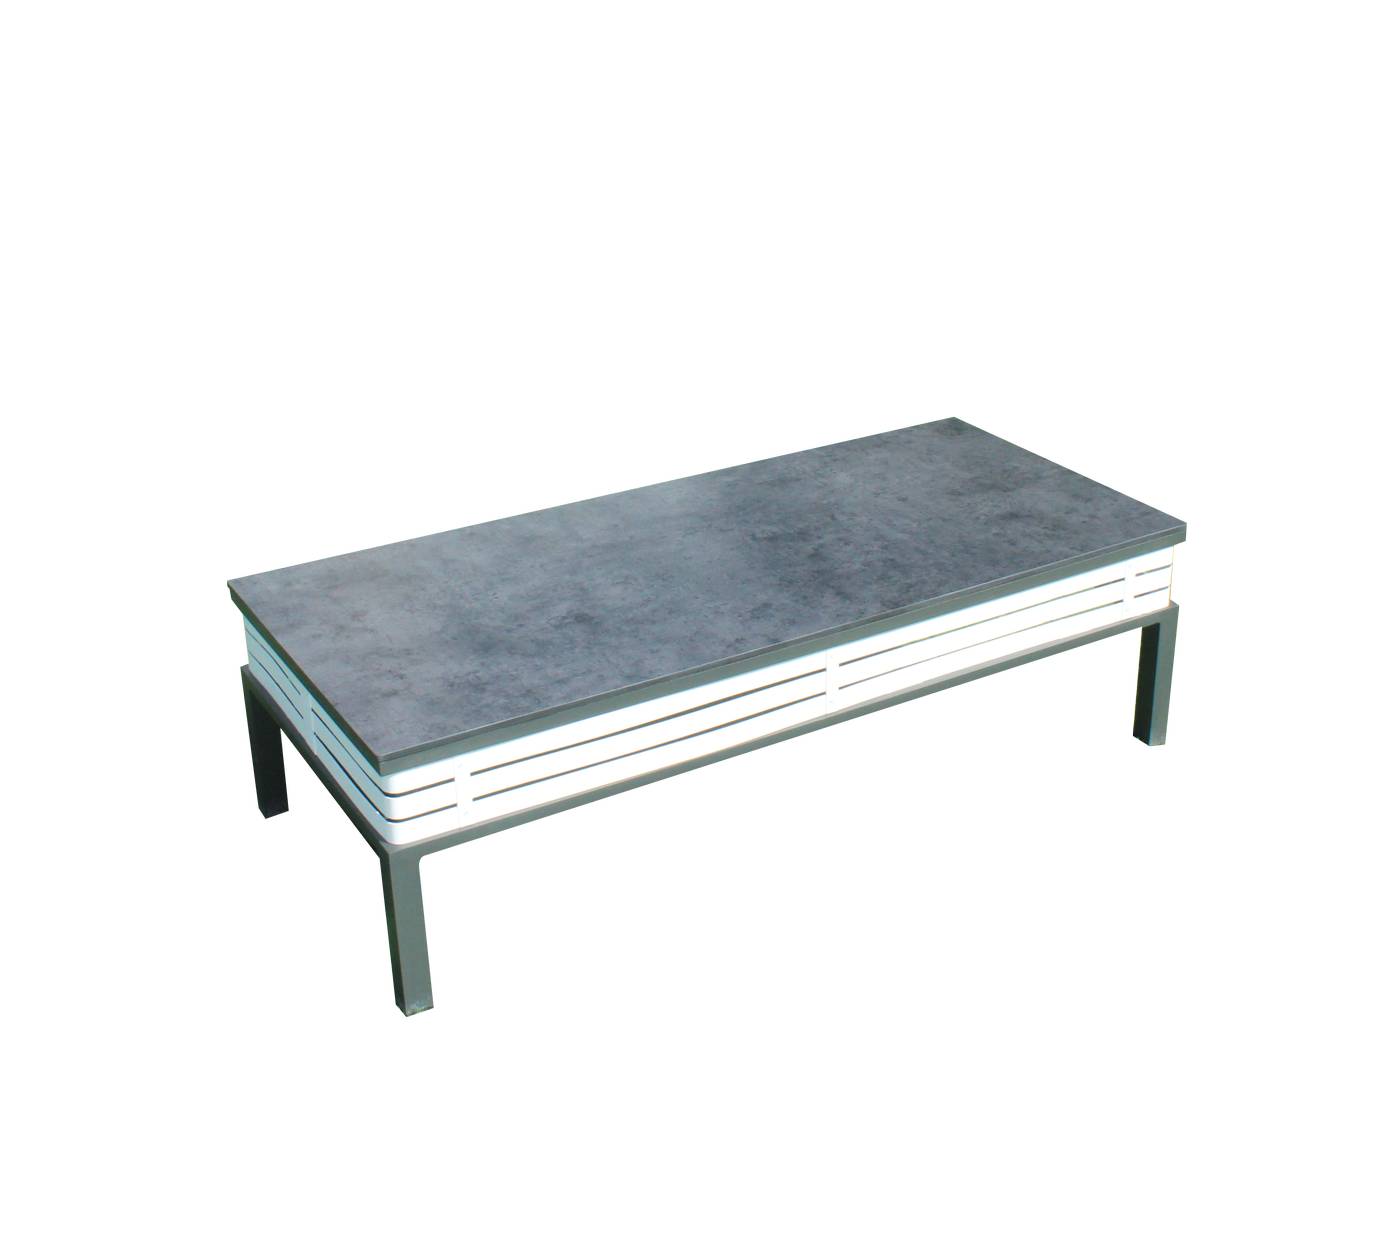 Set Aluminio Sira-8 - Coqueto conjunto de alumnio bicolor: 1 sofá de 3 plazas + 2 sillones + 1 mesa de centro.